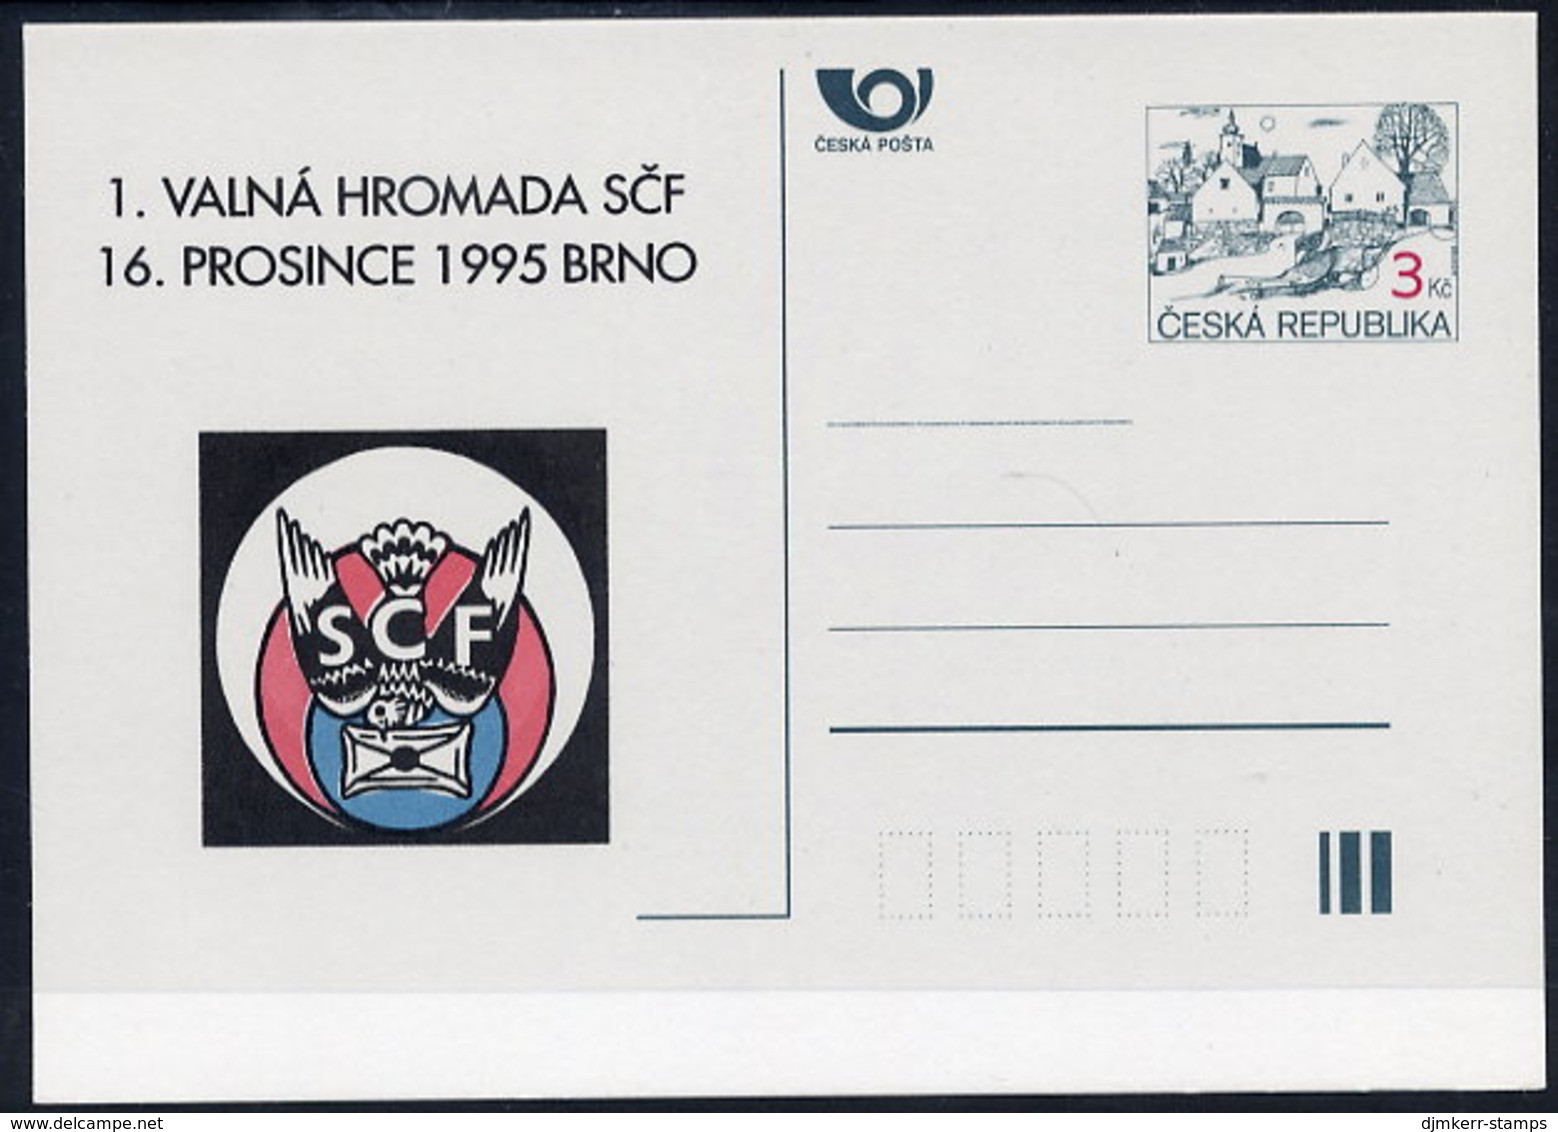 CZECH REPUBLIC 1995 3 Kc. SCF Philatelic Meeting Private Postcard Unused. - Postcards